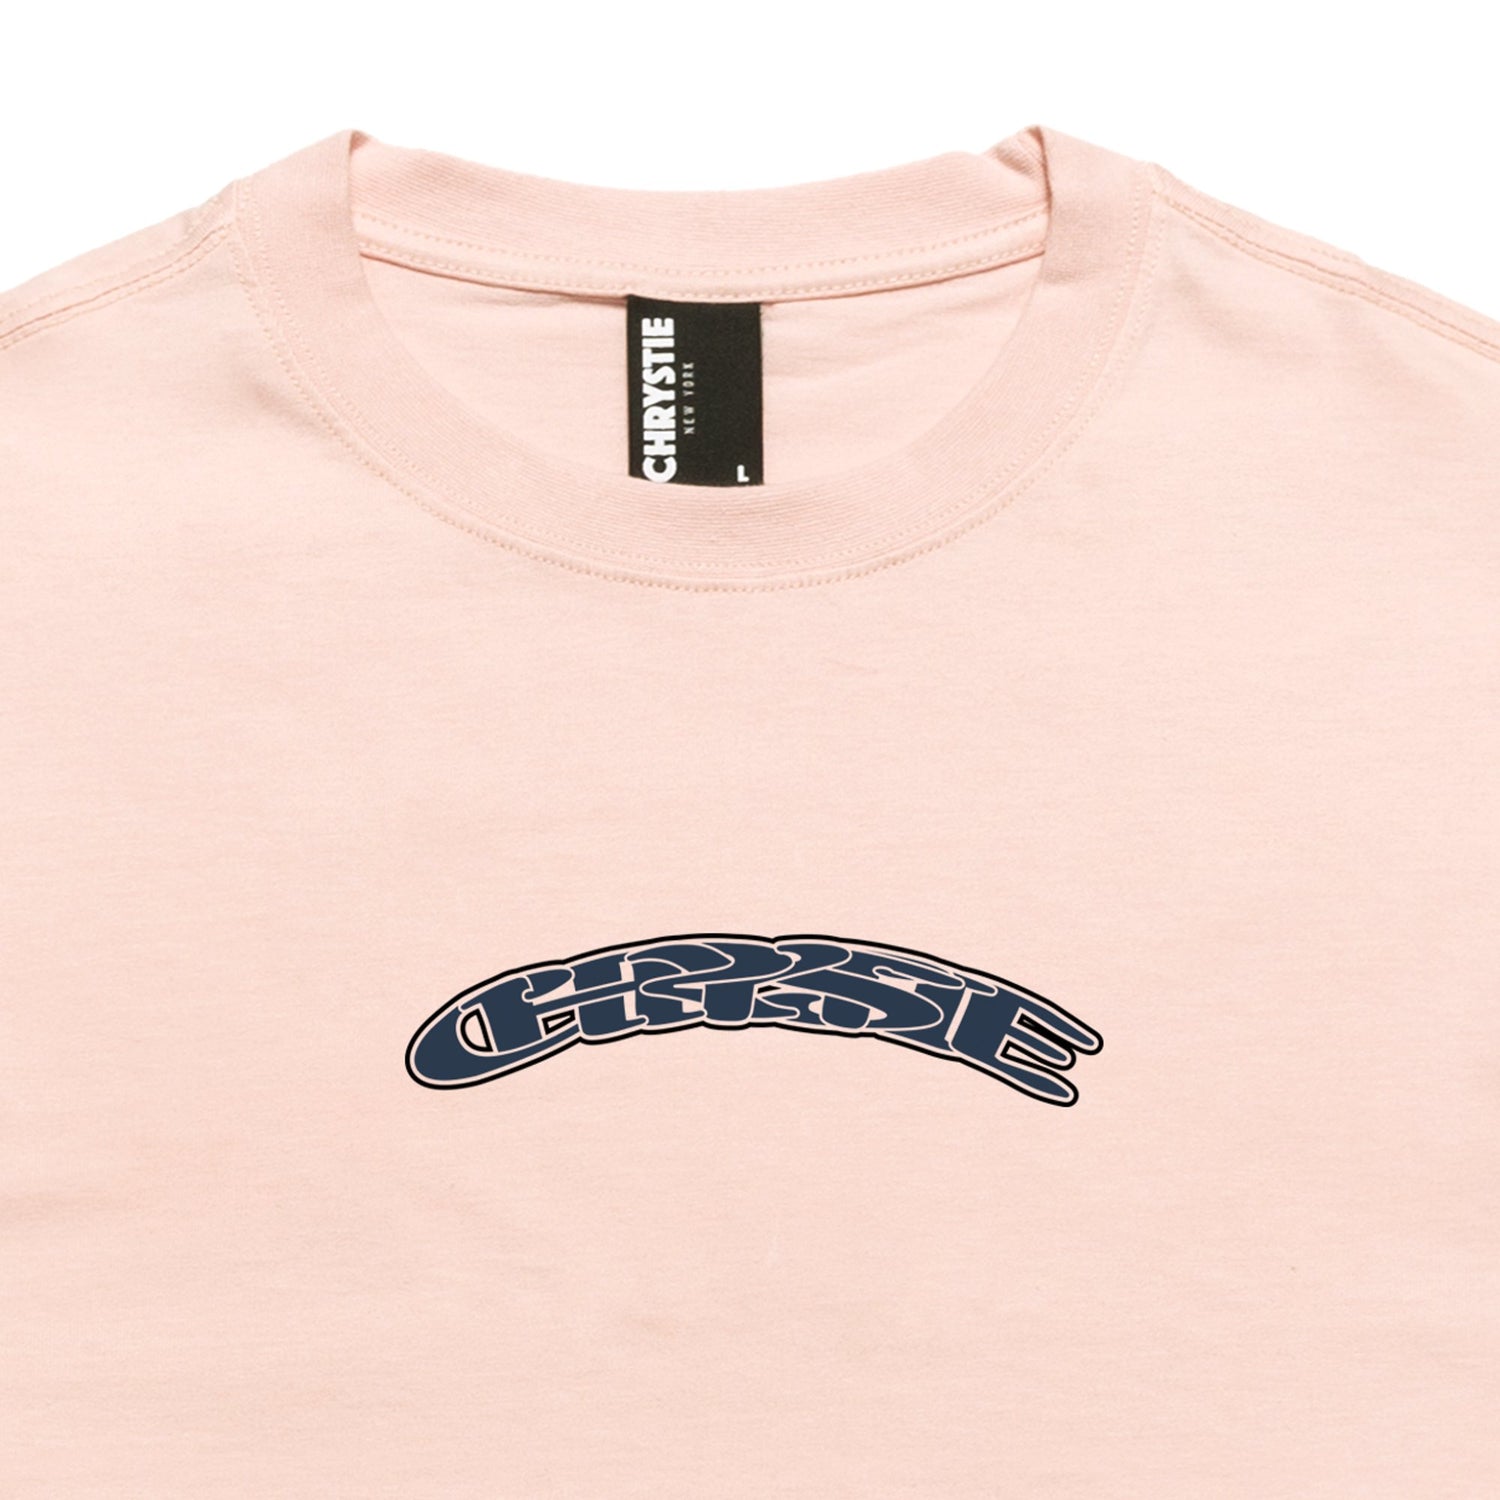 Chrystie NYC x Soho Warriors - SWFC Twisted logo T-Shirt / Light Pink